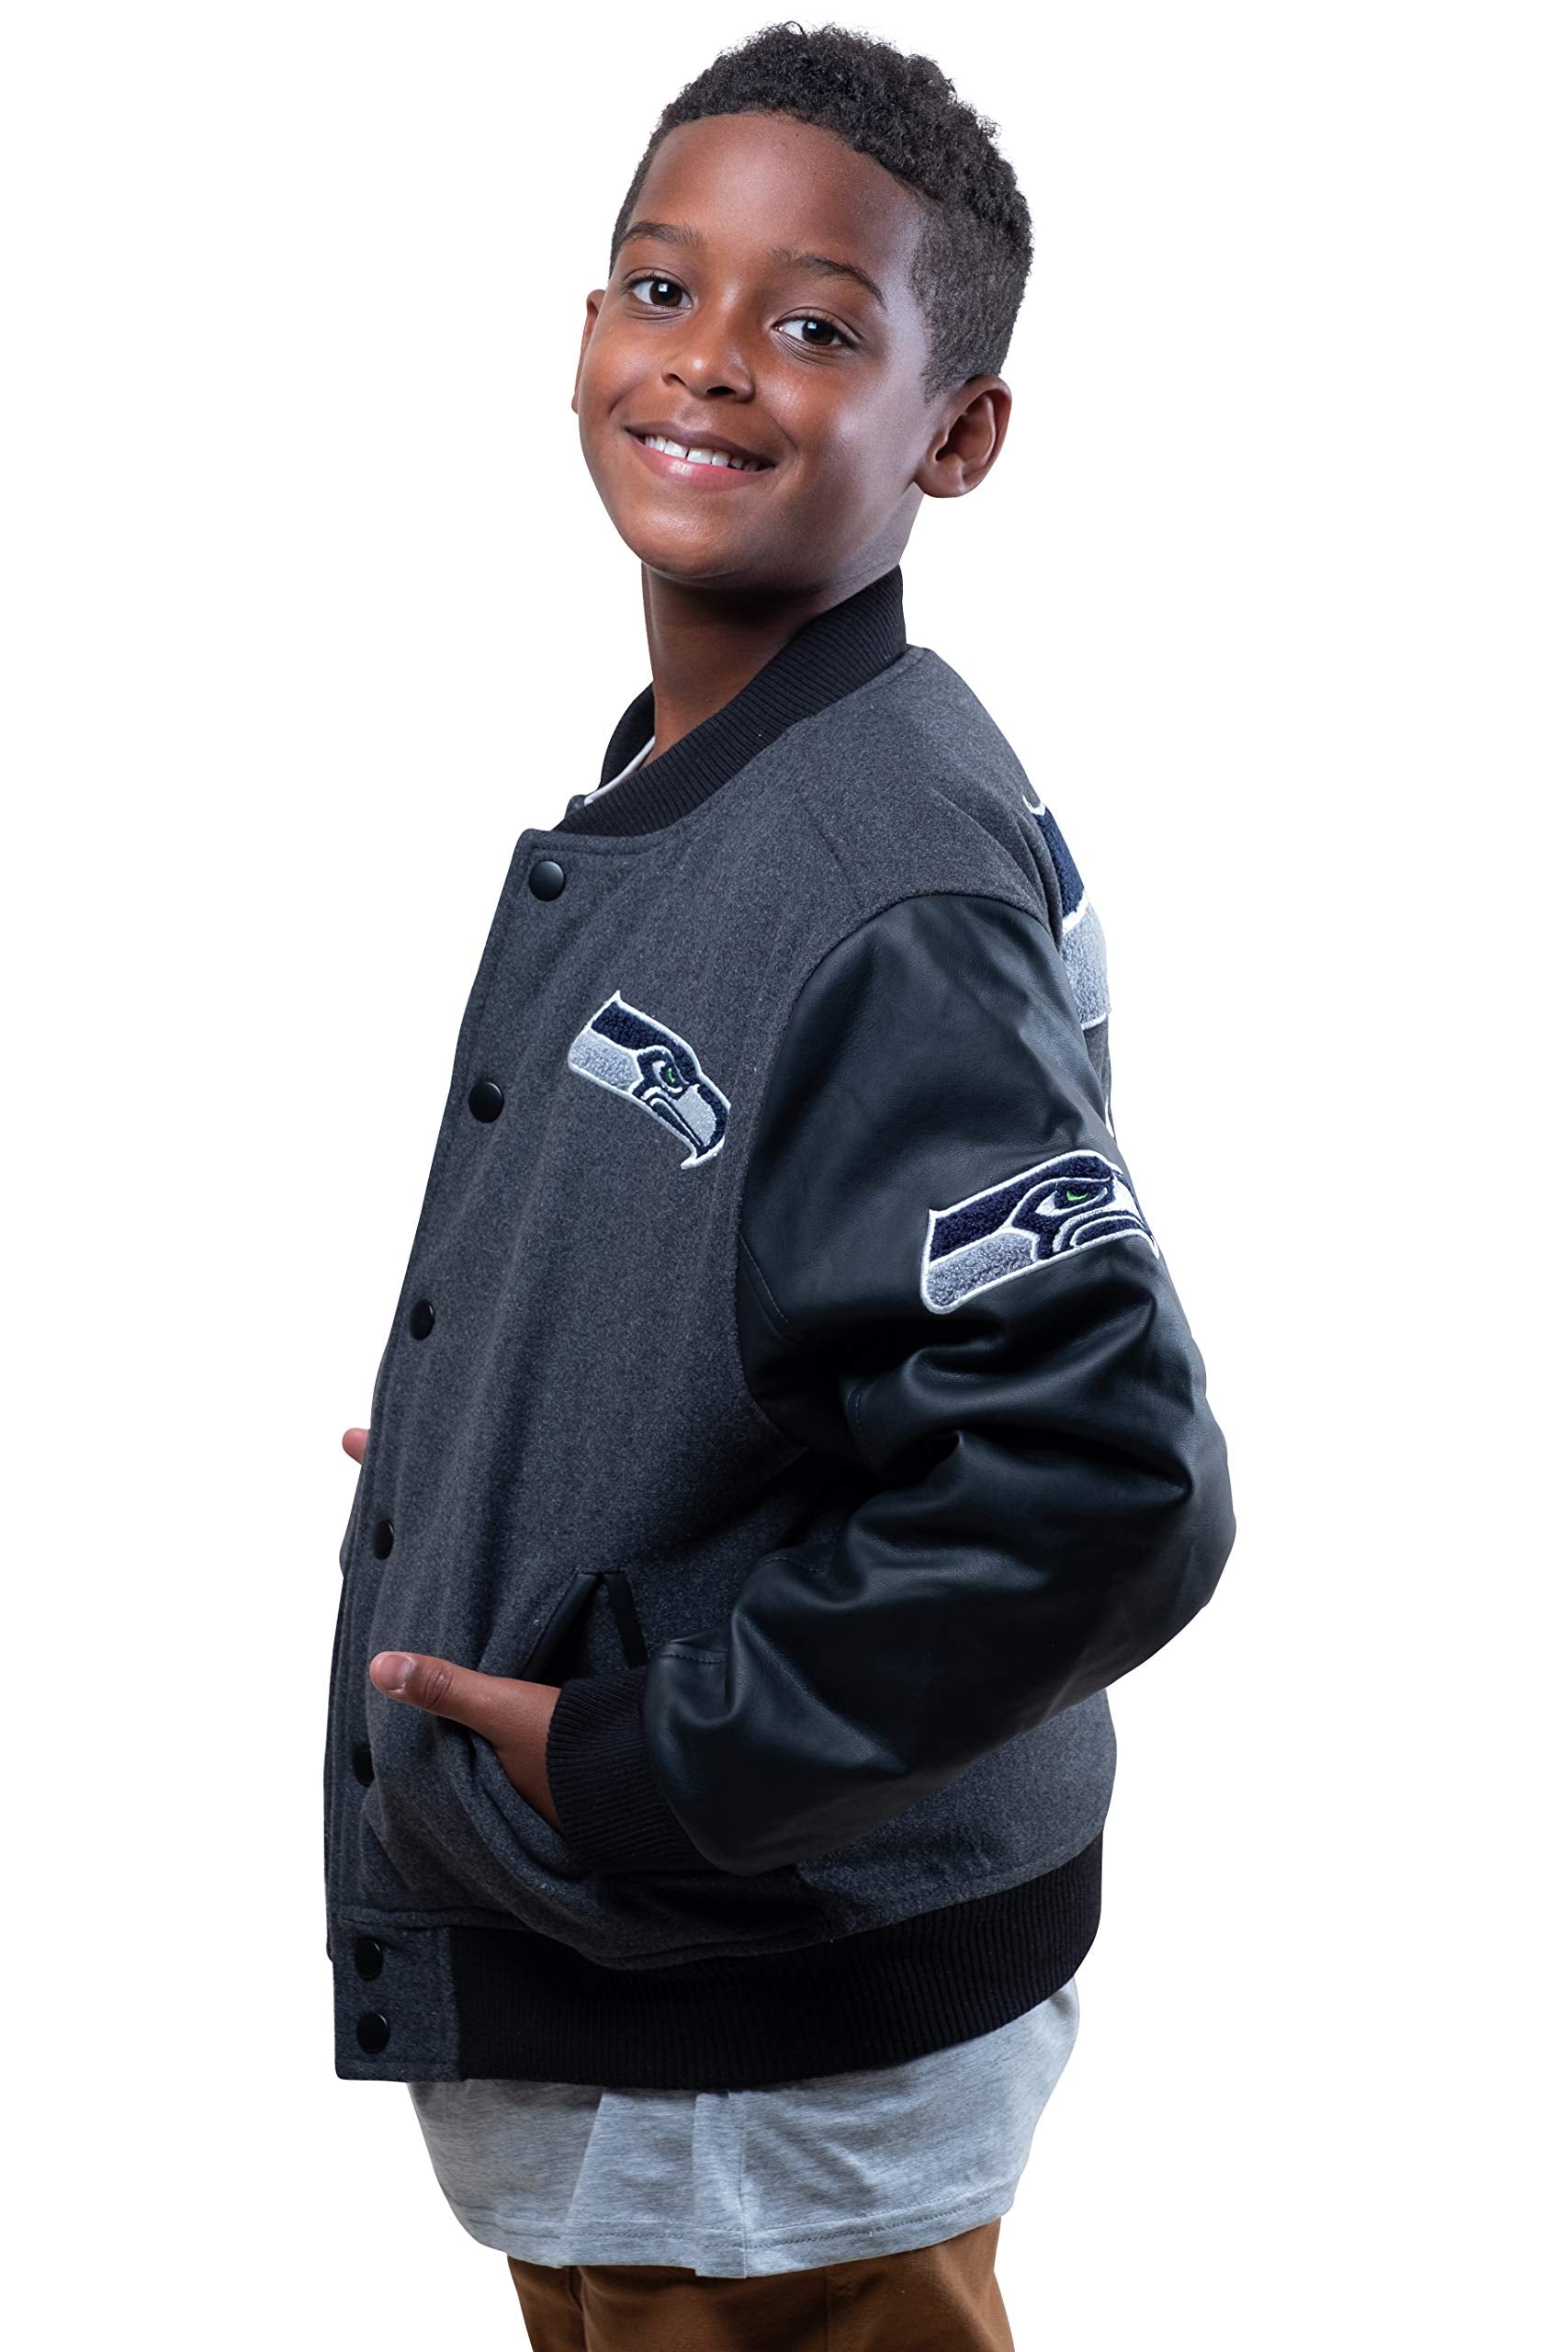 Ultra Game NFL Seattle Seahawks Youth Classic Varsity Coaches Jacket|Seattle Seahawks